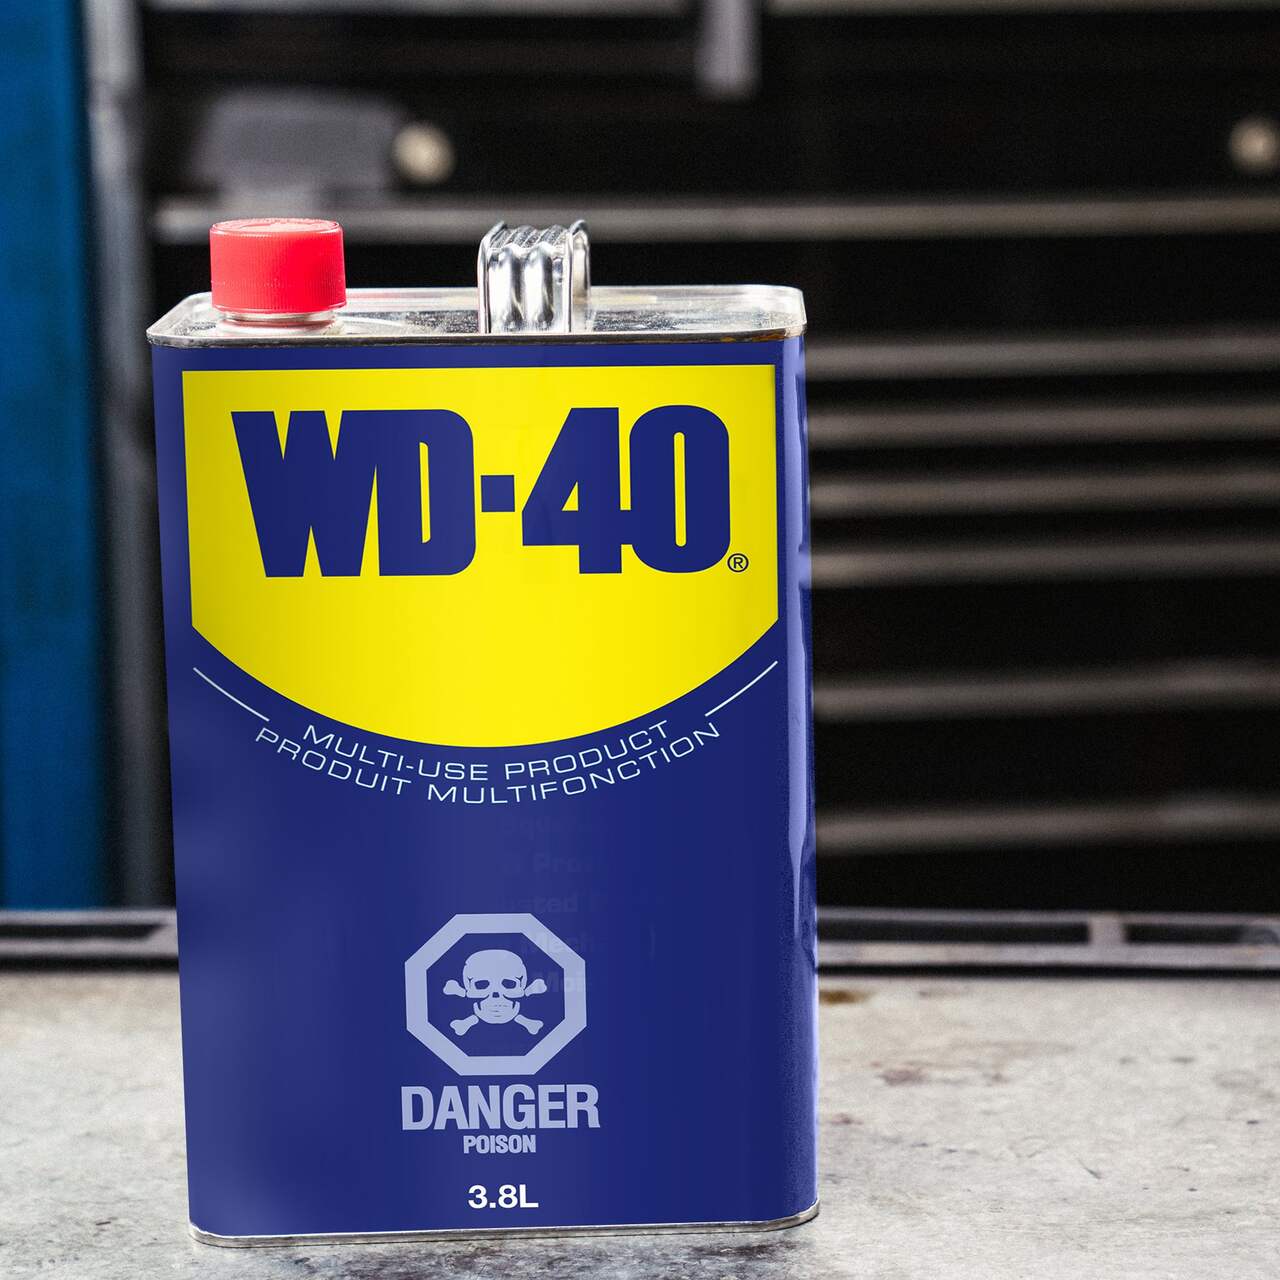 WD-40 01110 Multi-Purpose Liquid Lubricant, 3.78-L